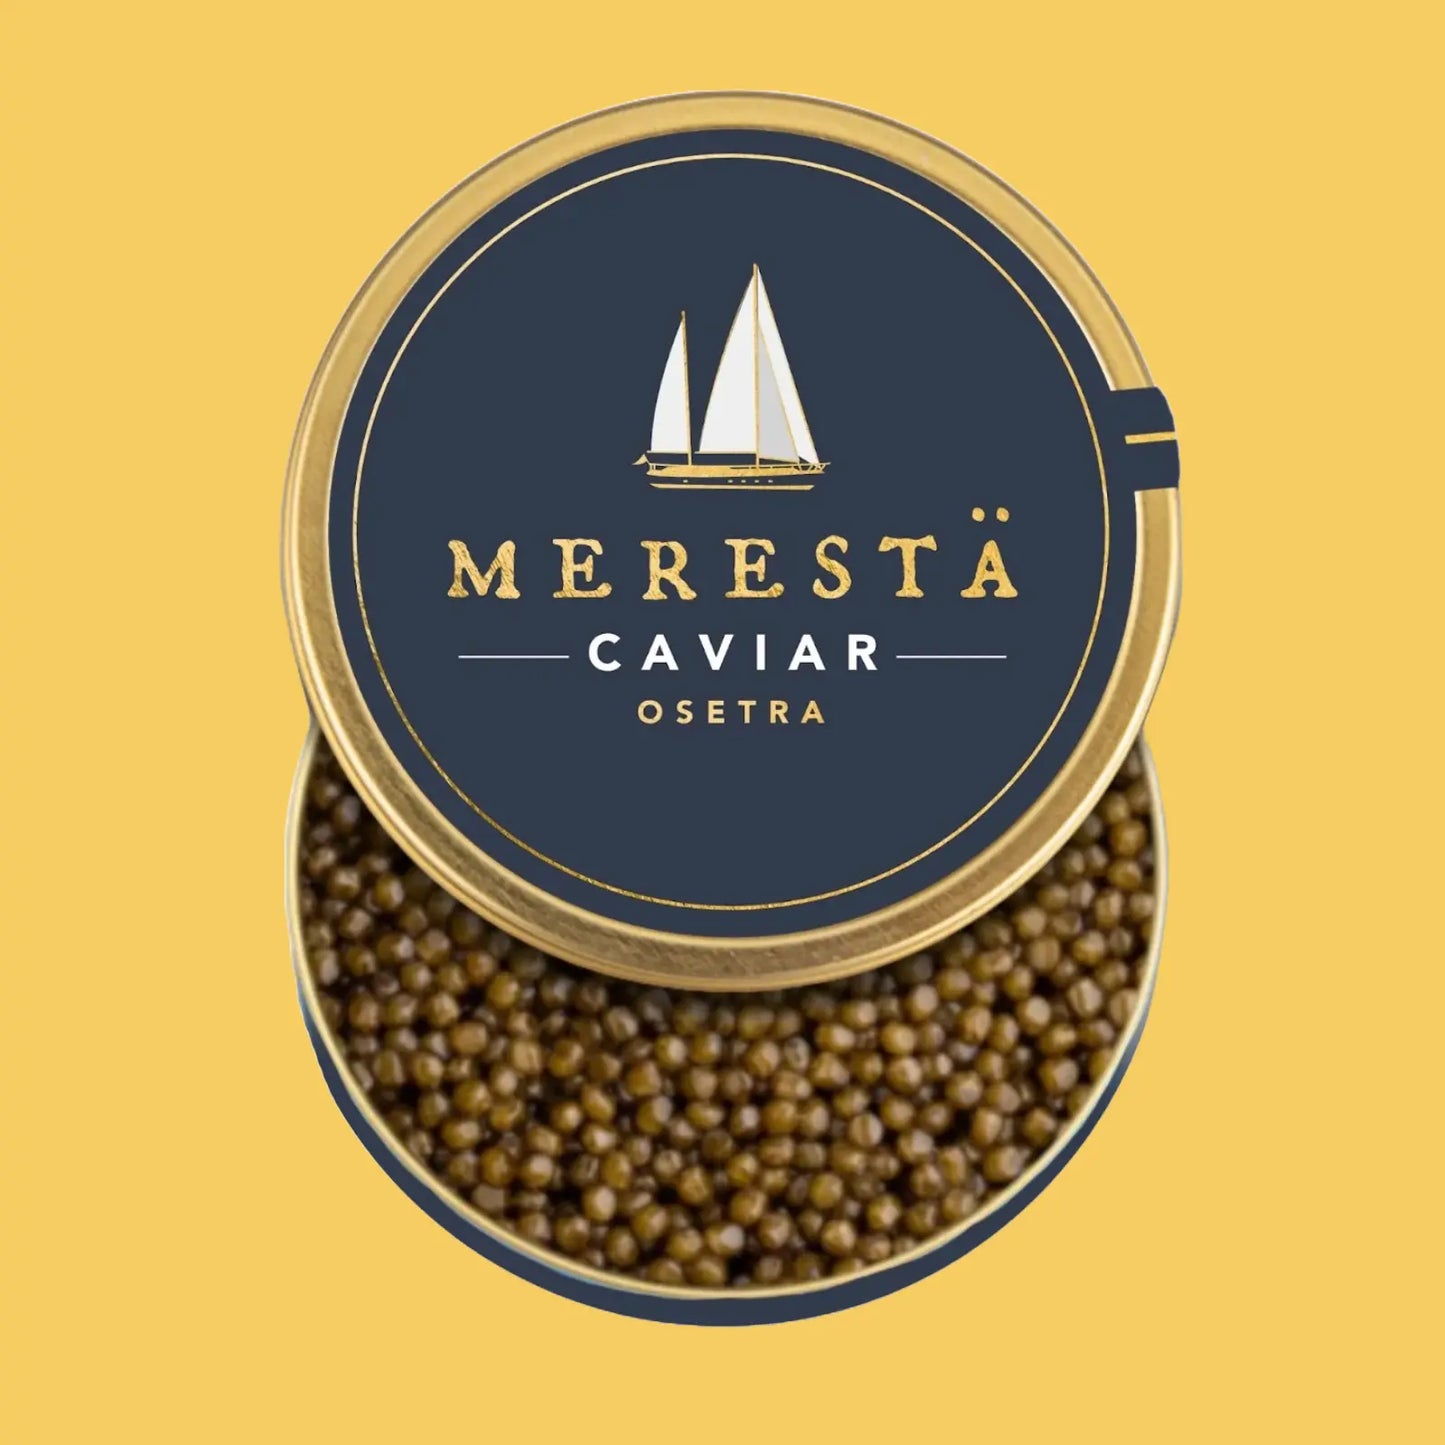 Bester Osetra Caviar